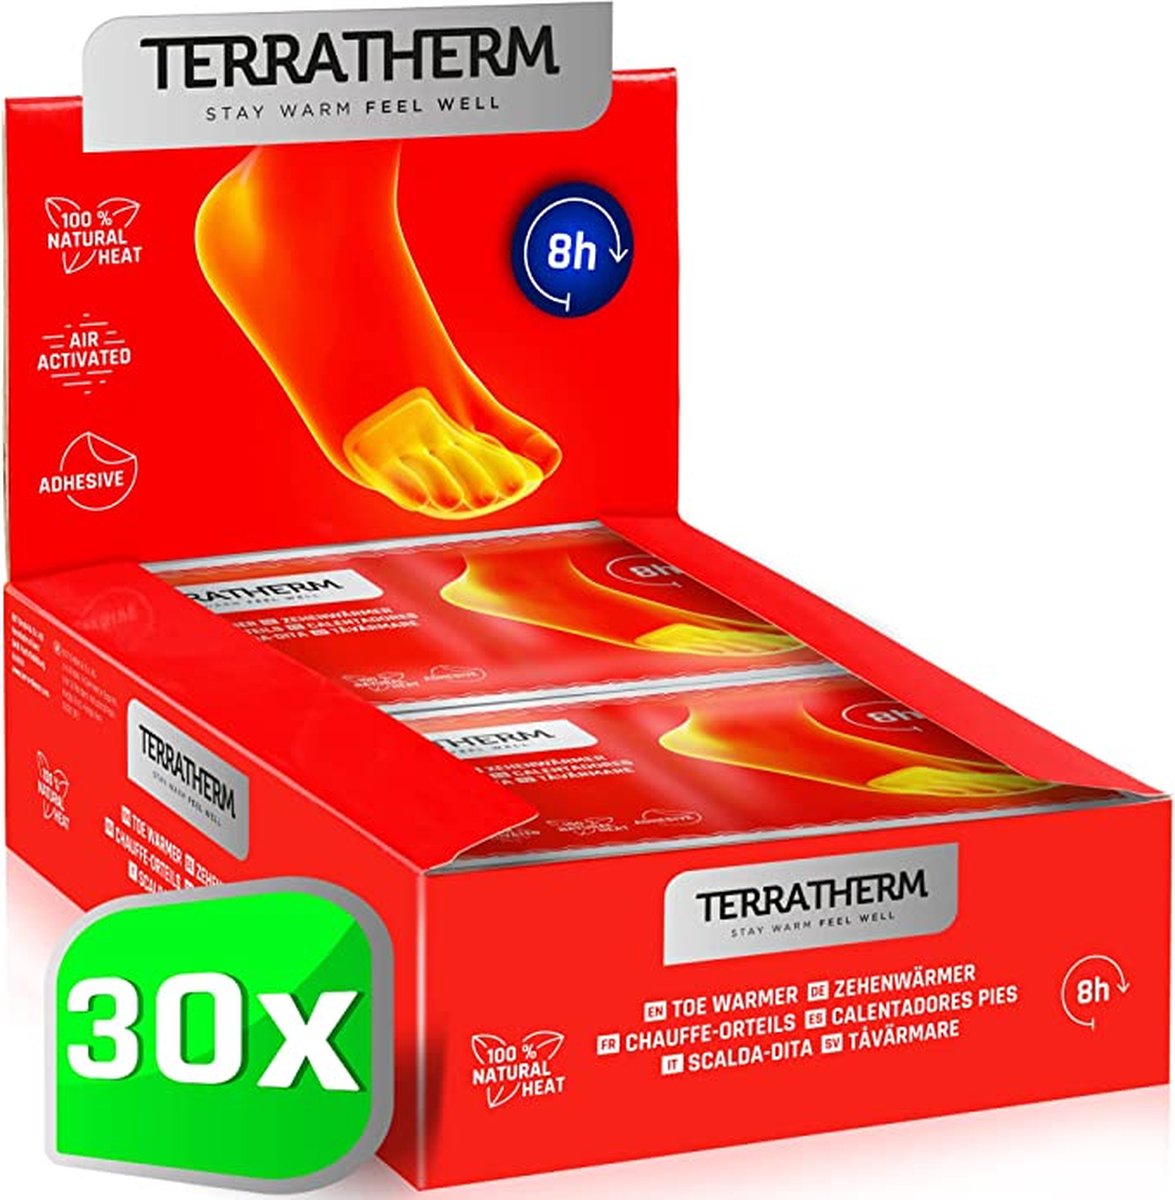 Thermopad Chaufferette main Extra Warm (10 paires) - Pour la